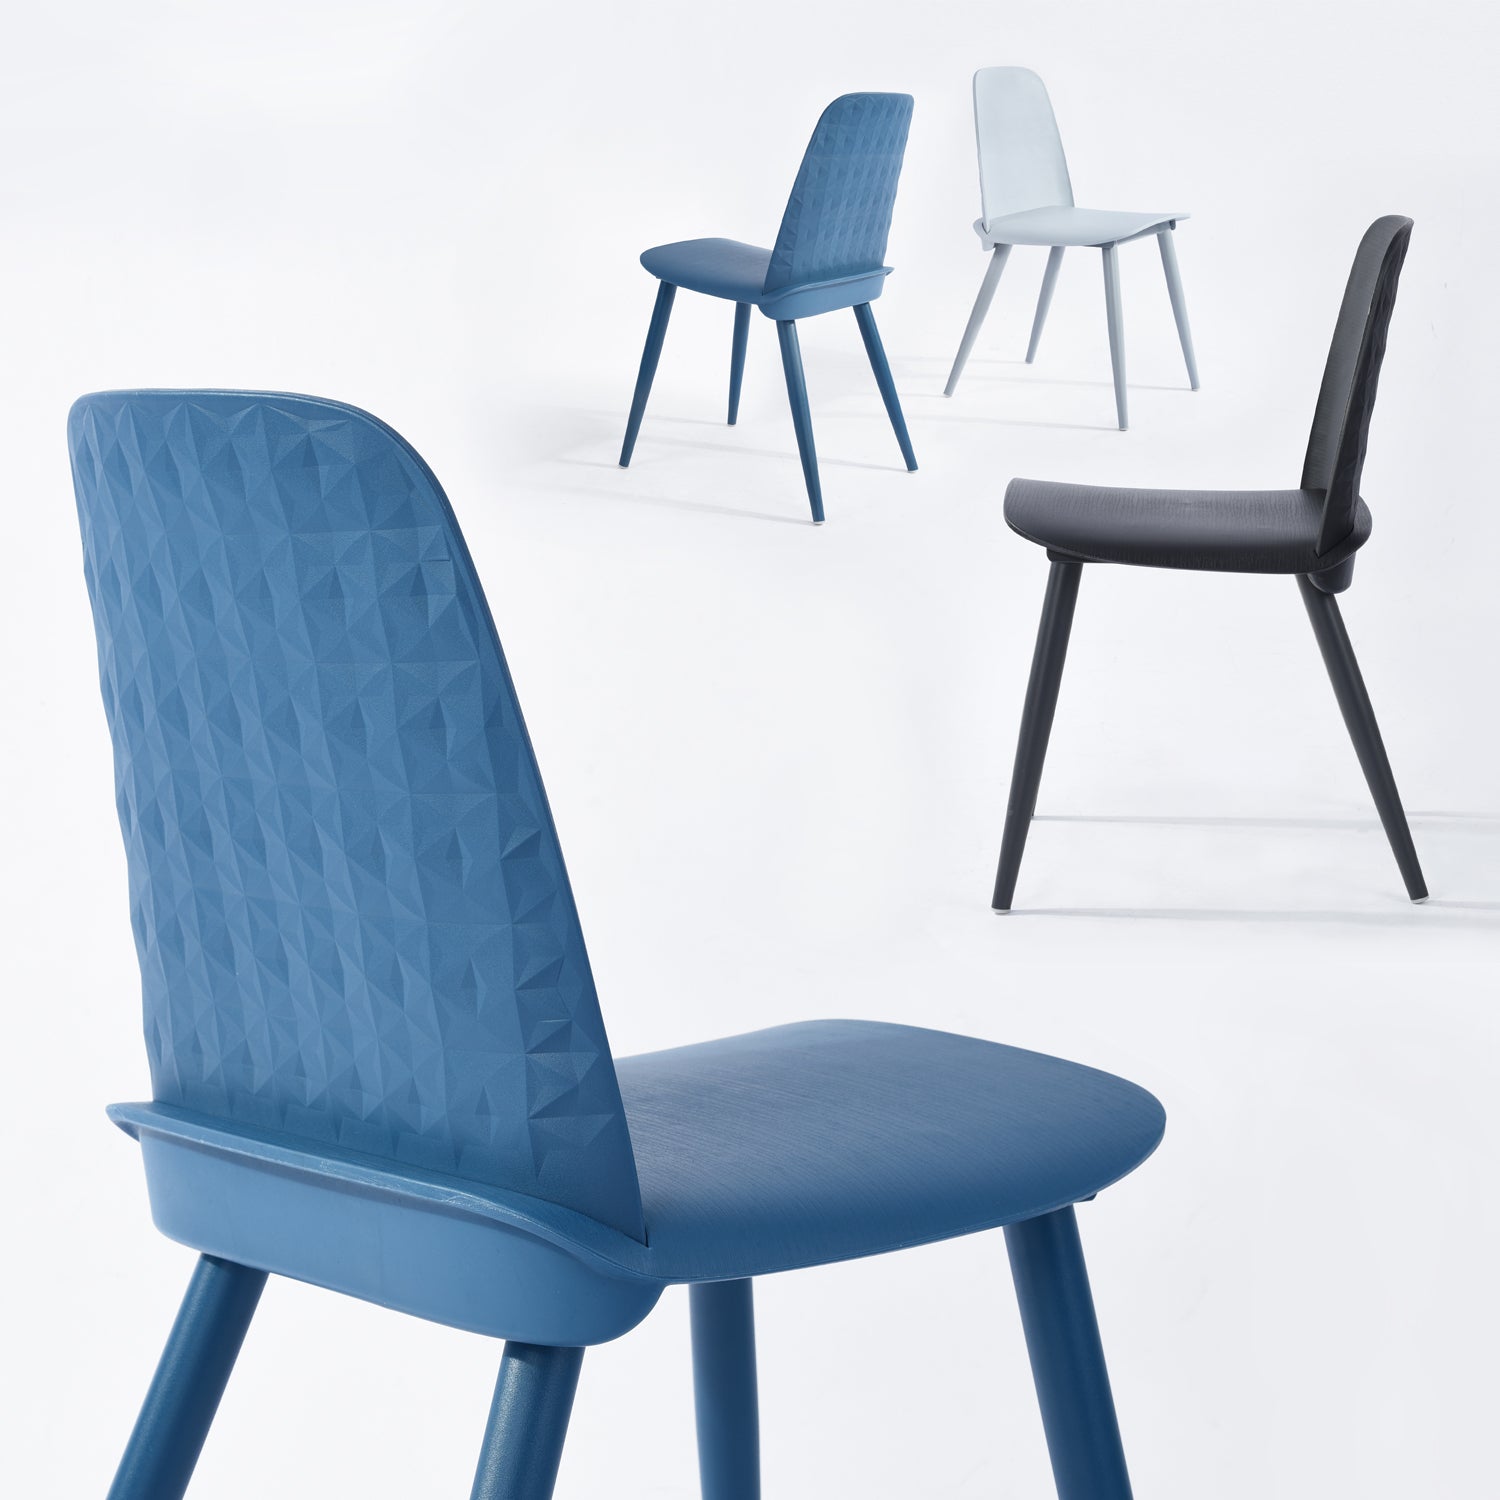 Set of 4 Scandinavian designer dining chairs in gray plastic - ARKEN GRAY FL